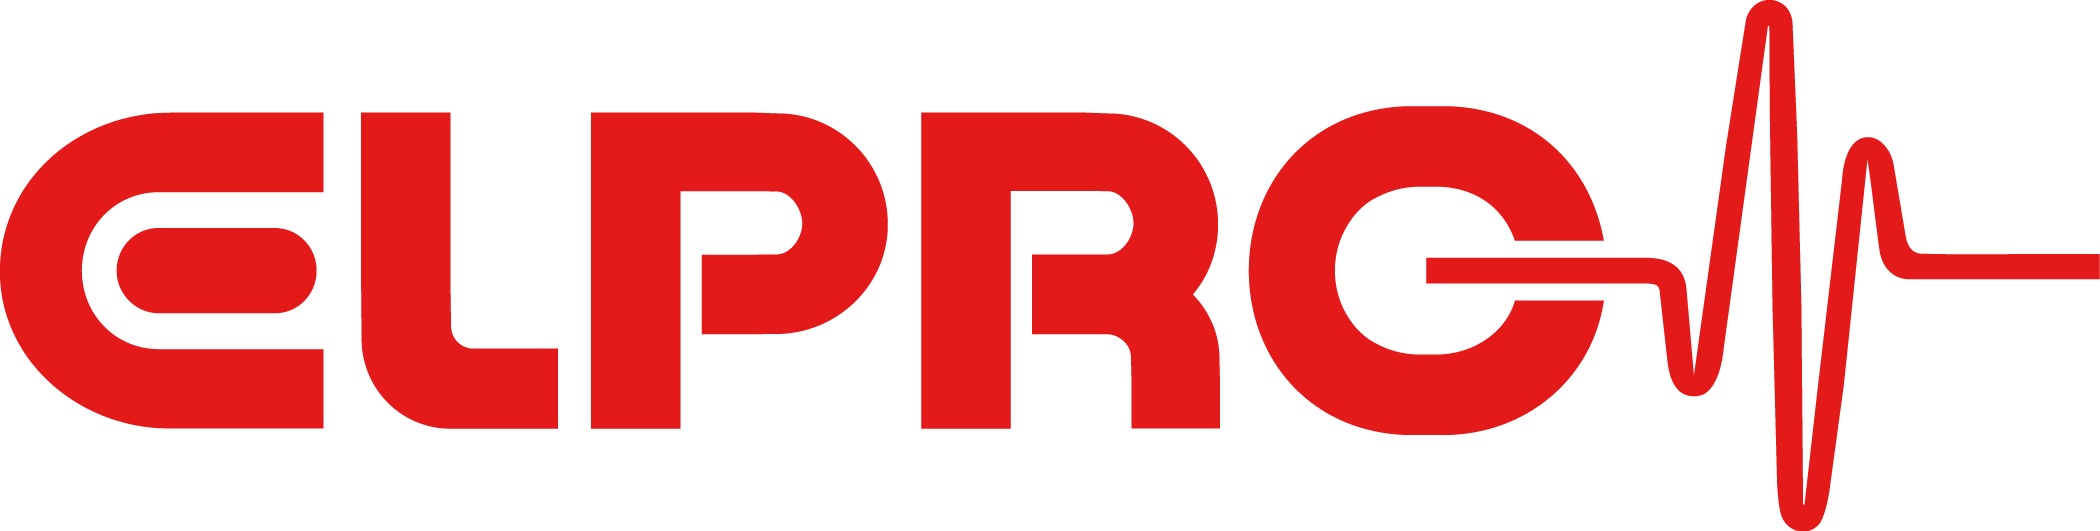 ELPRO Logo